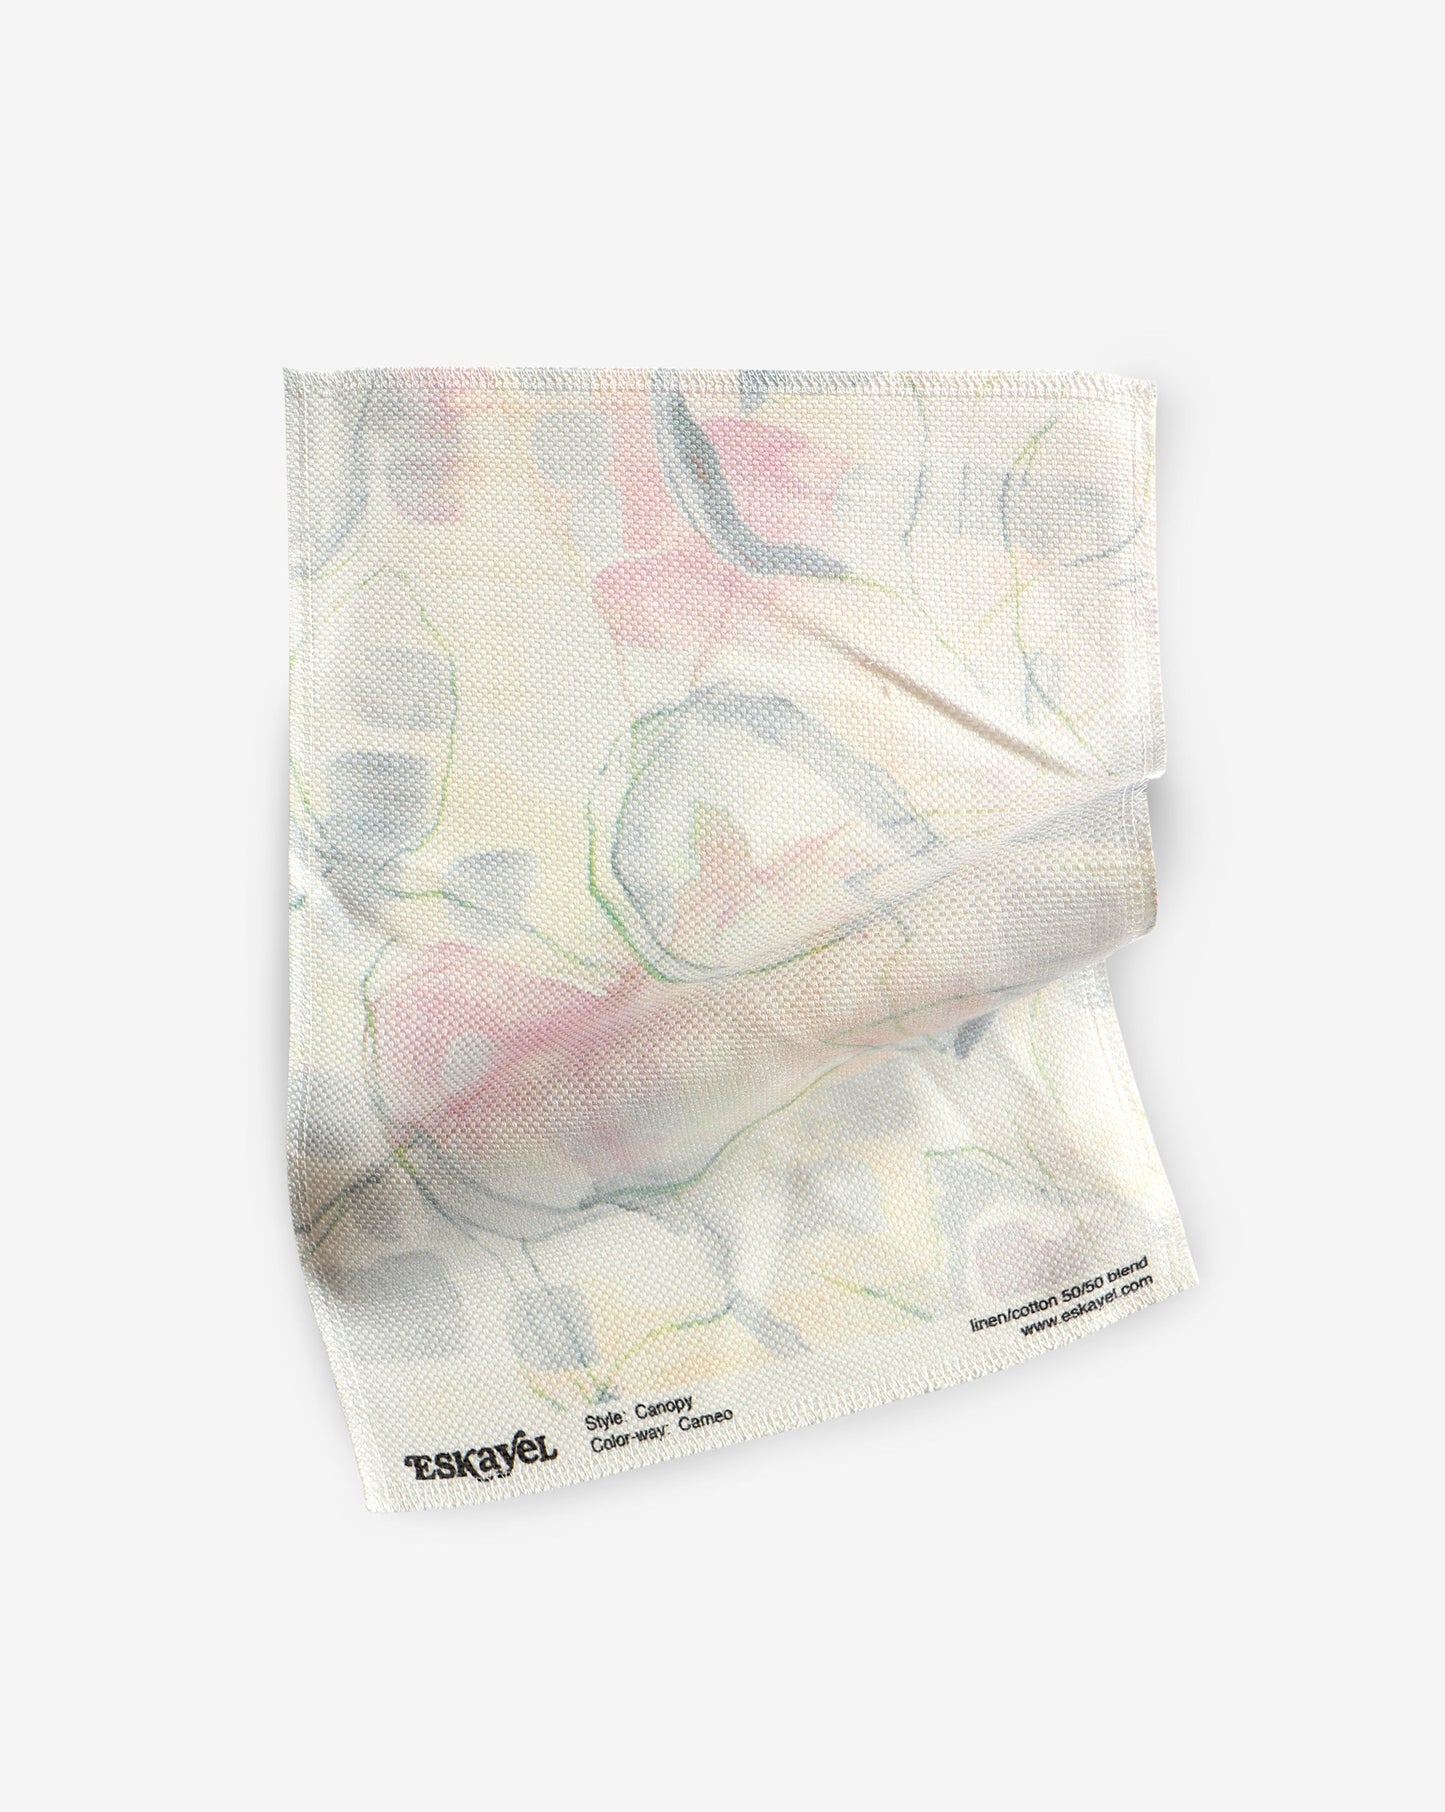 Canopy Fabric Sample||Cameo